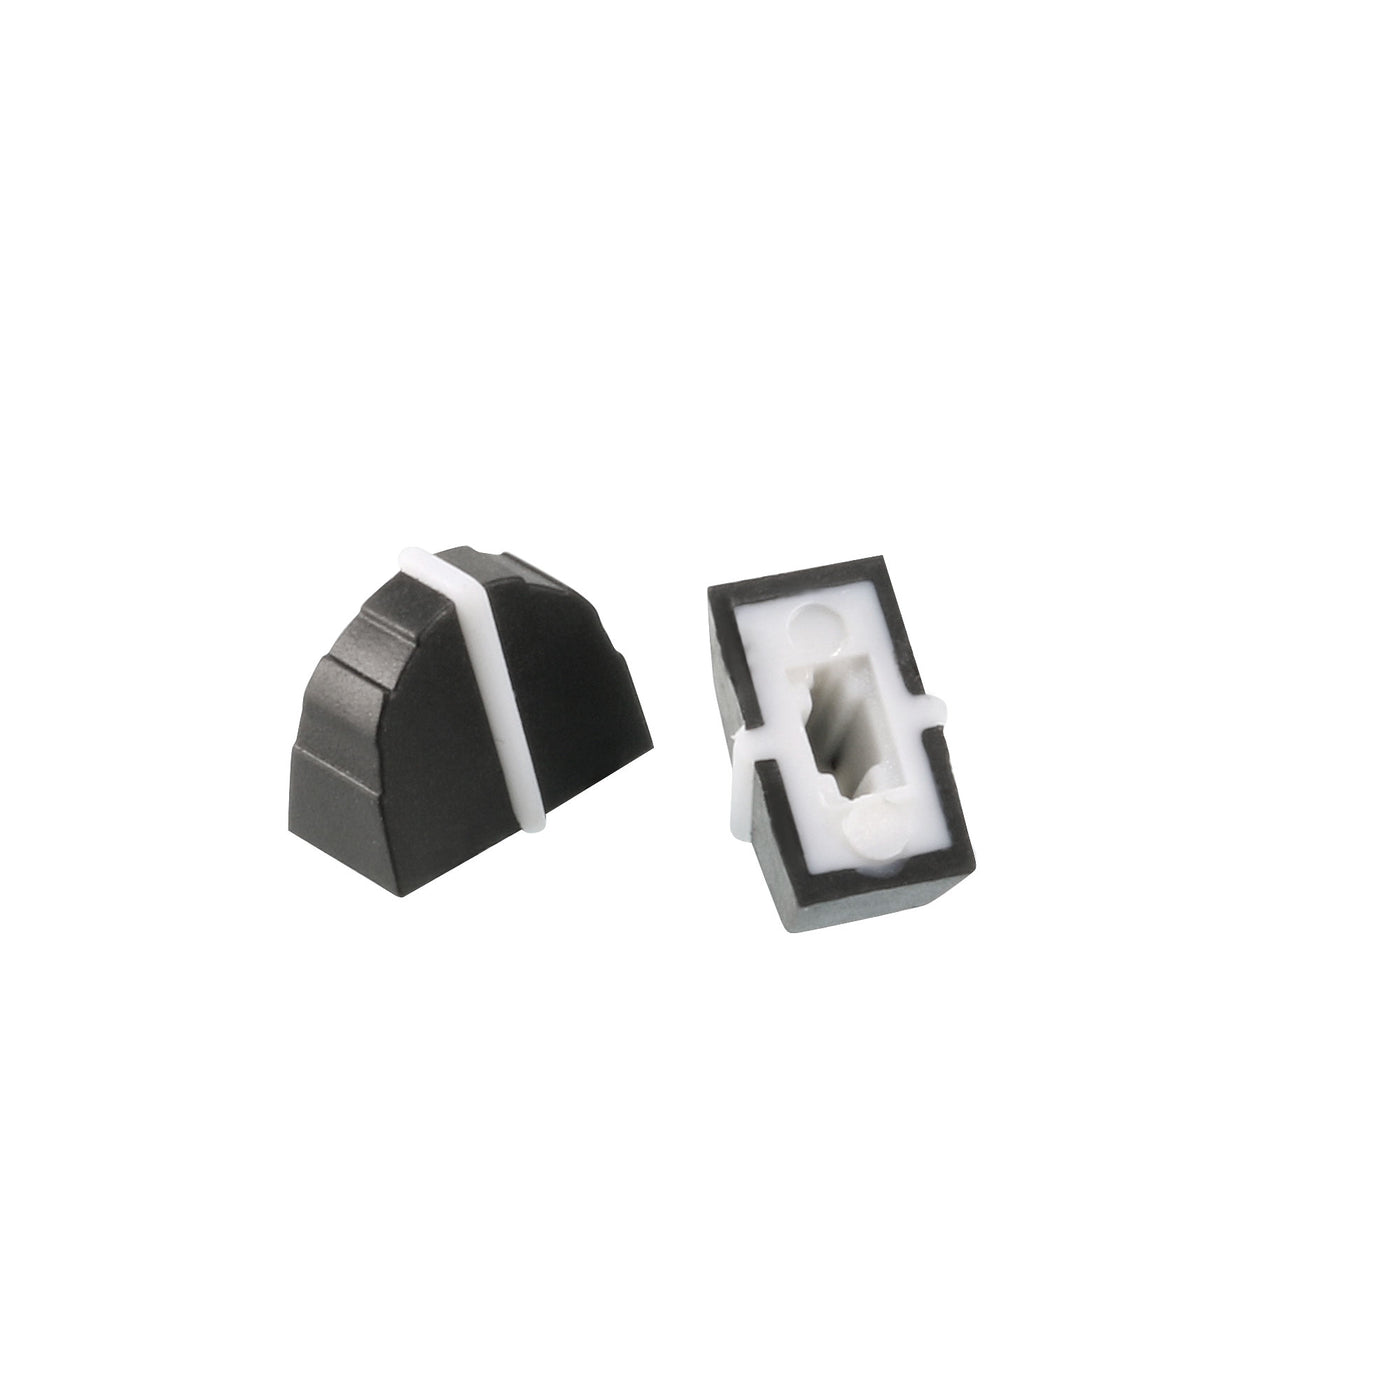 uxcell Uxcell Plastic Straight Slide Potentiometer Flat Push Knob Insert Shaft 4x1.6mm White Black 5pcs